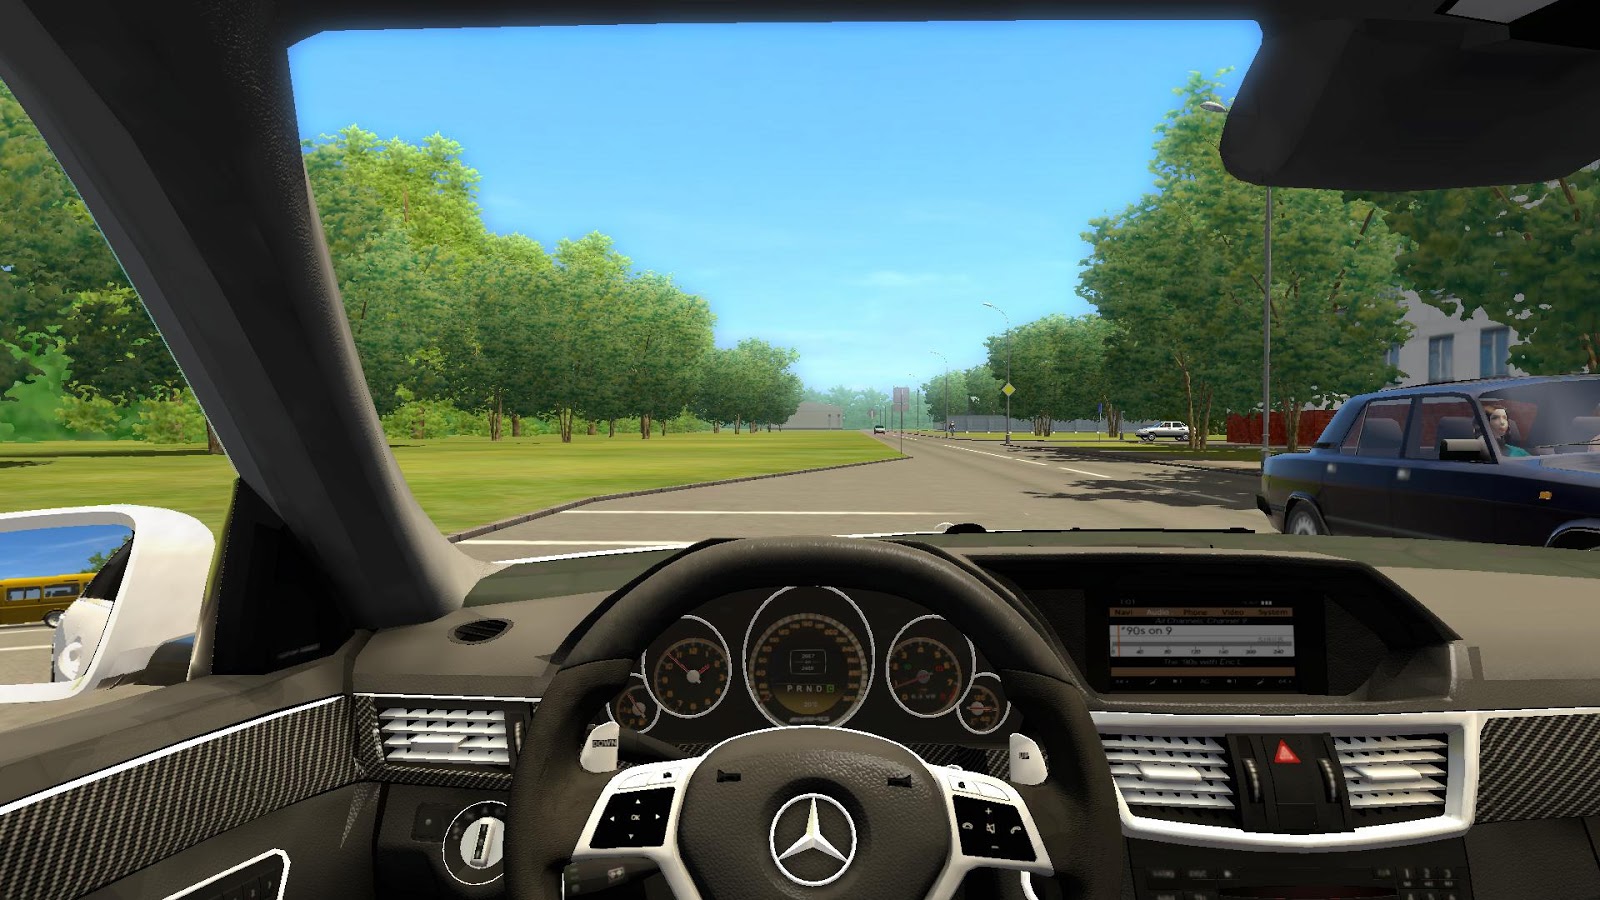 Ucds car driving simulator. BMW e66 City car Driving. Mercedes w202 City car Driving. Mercedes gl450 City car Driving. BMW e43 City car Driving.